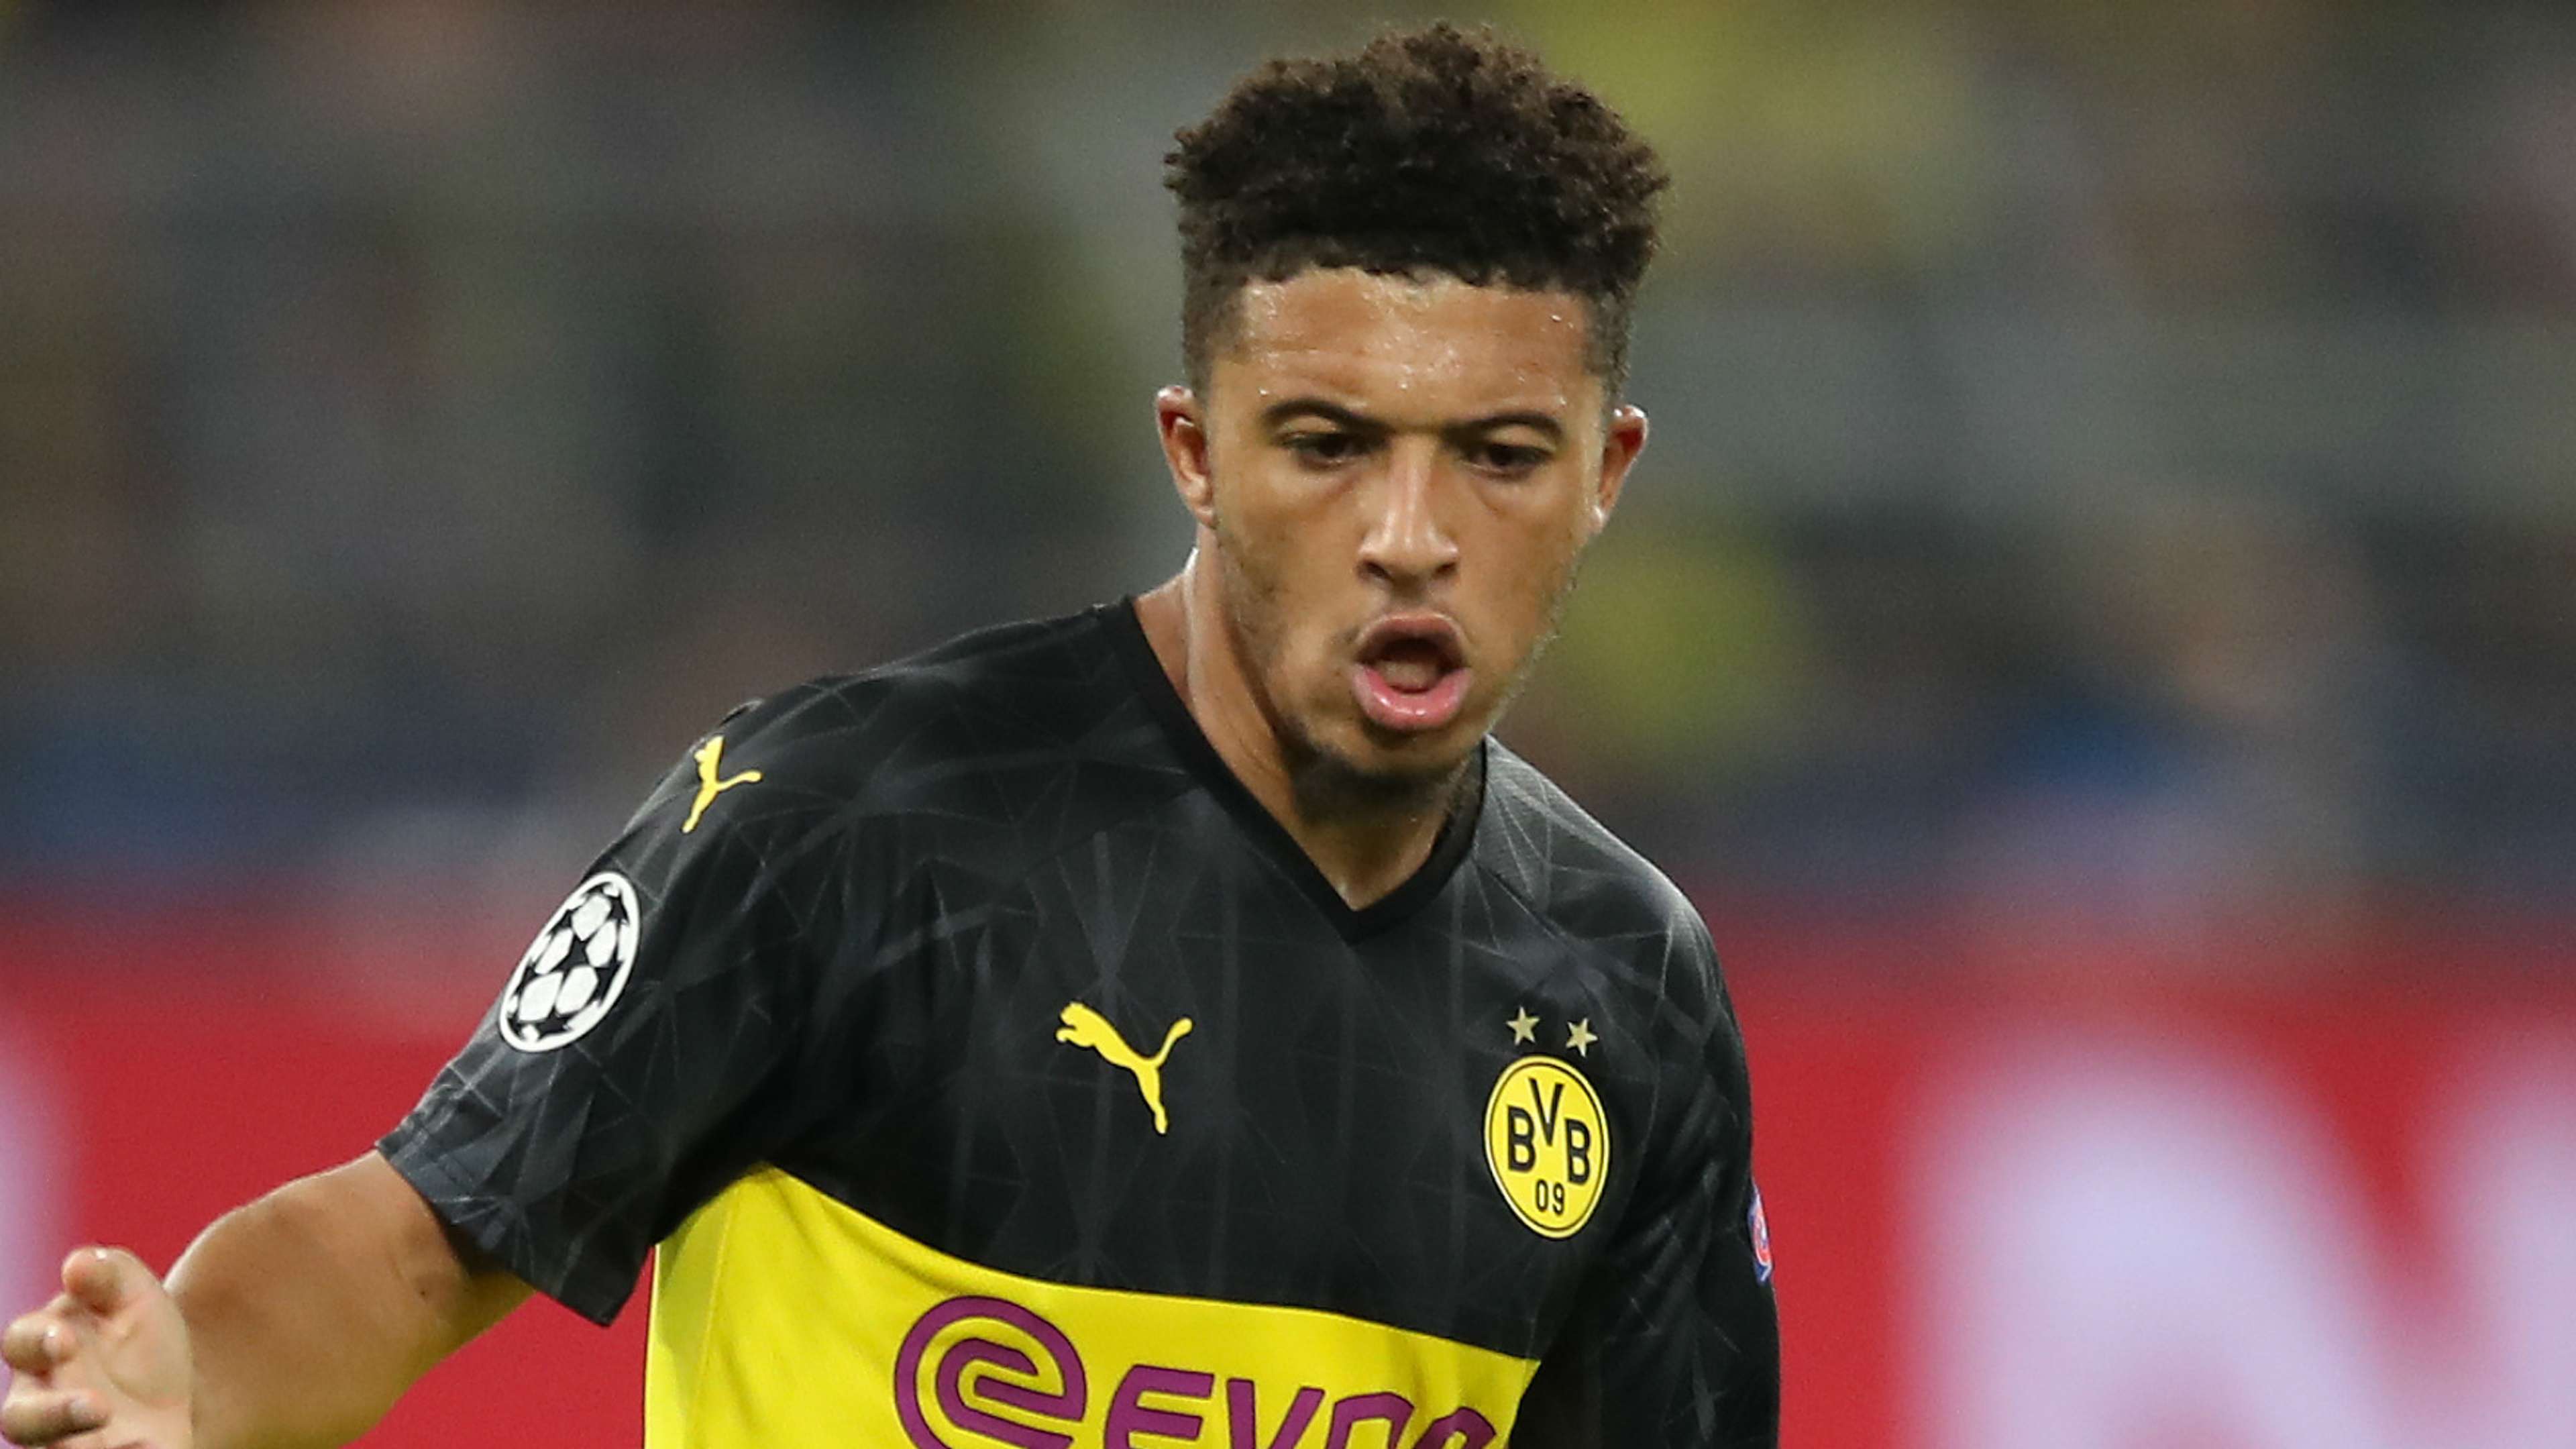 Jadon Sancho Borussia Dortmund 2019-20